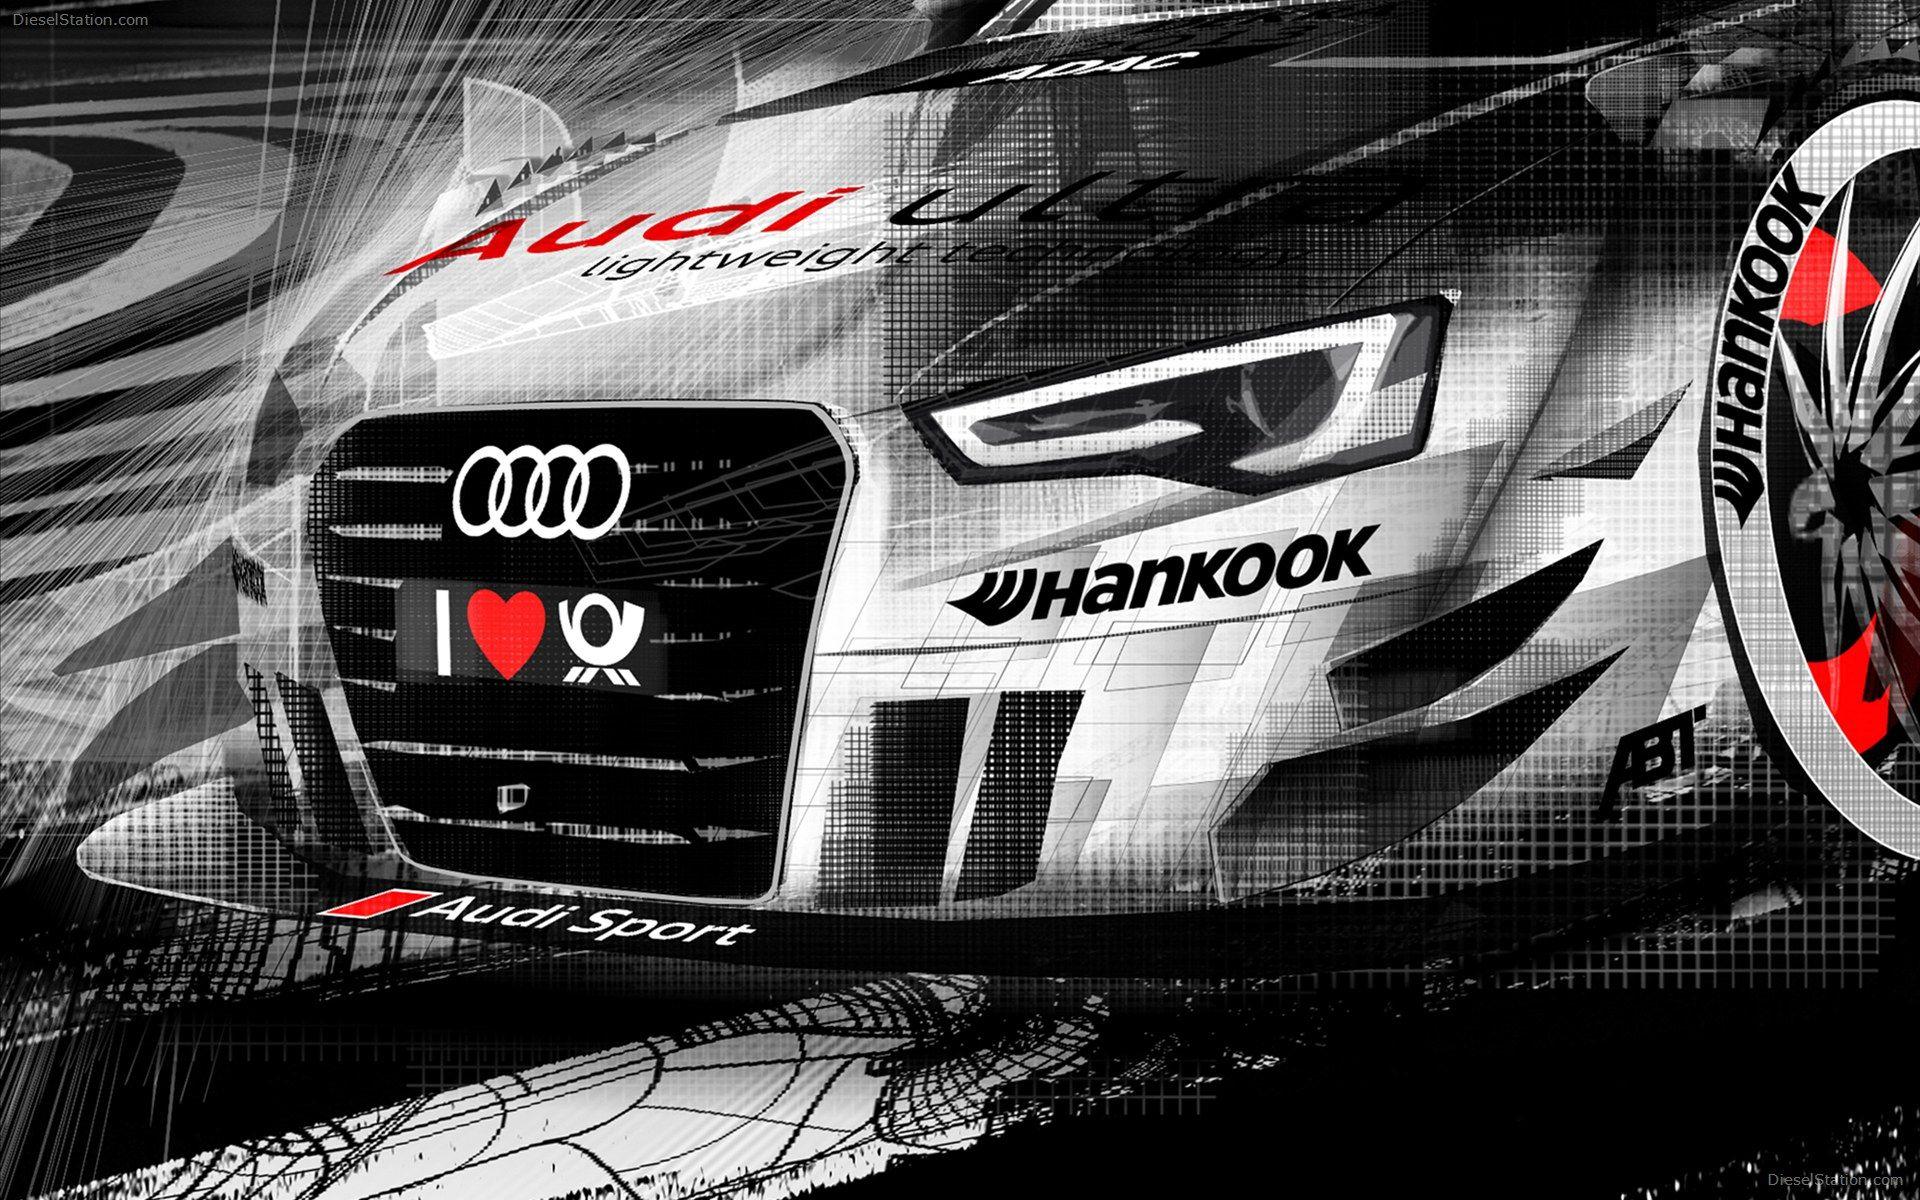 Audi Dtm Wallpapers